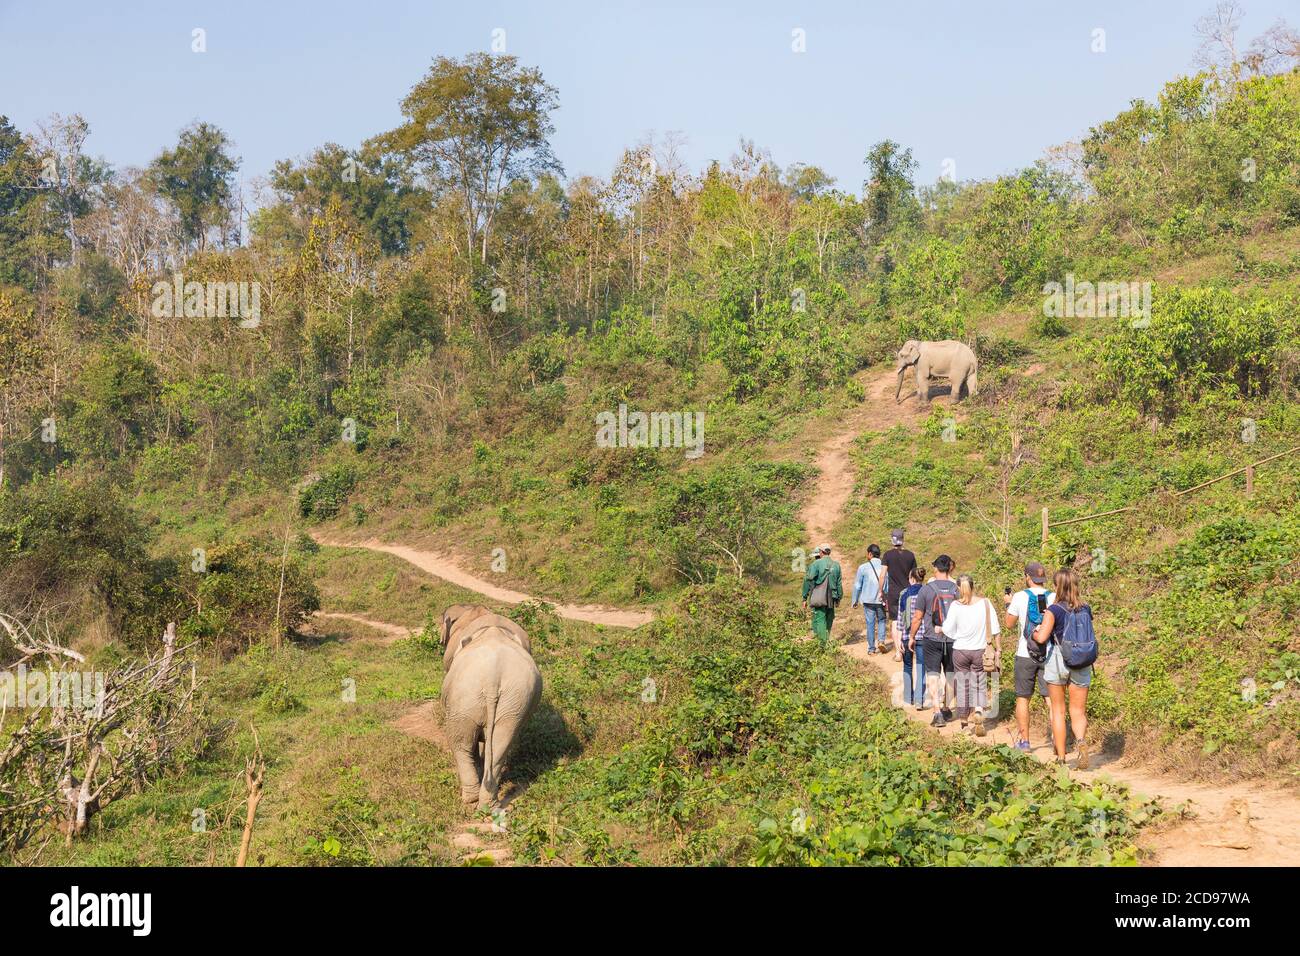 Laos, Sayaboury province, Elephant Conservation Center, tourists observing elephants Stock Photo